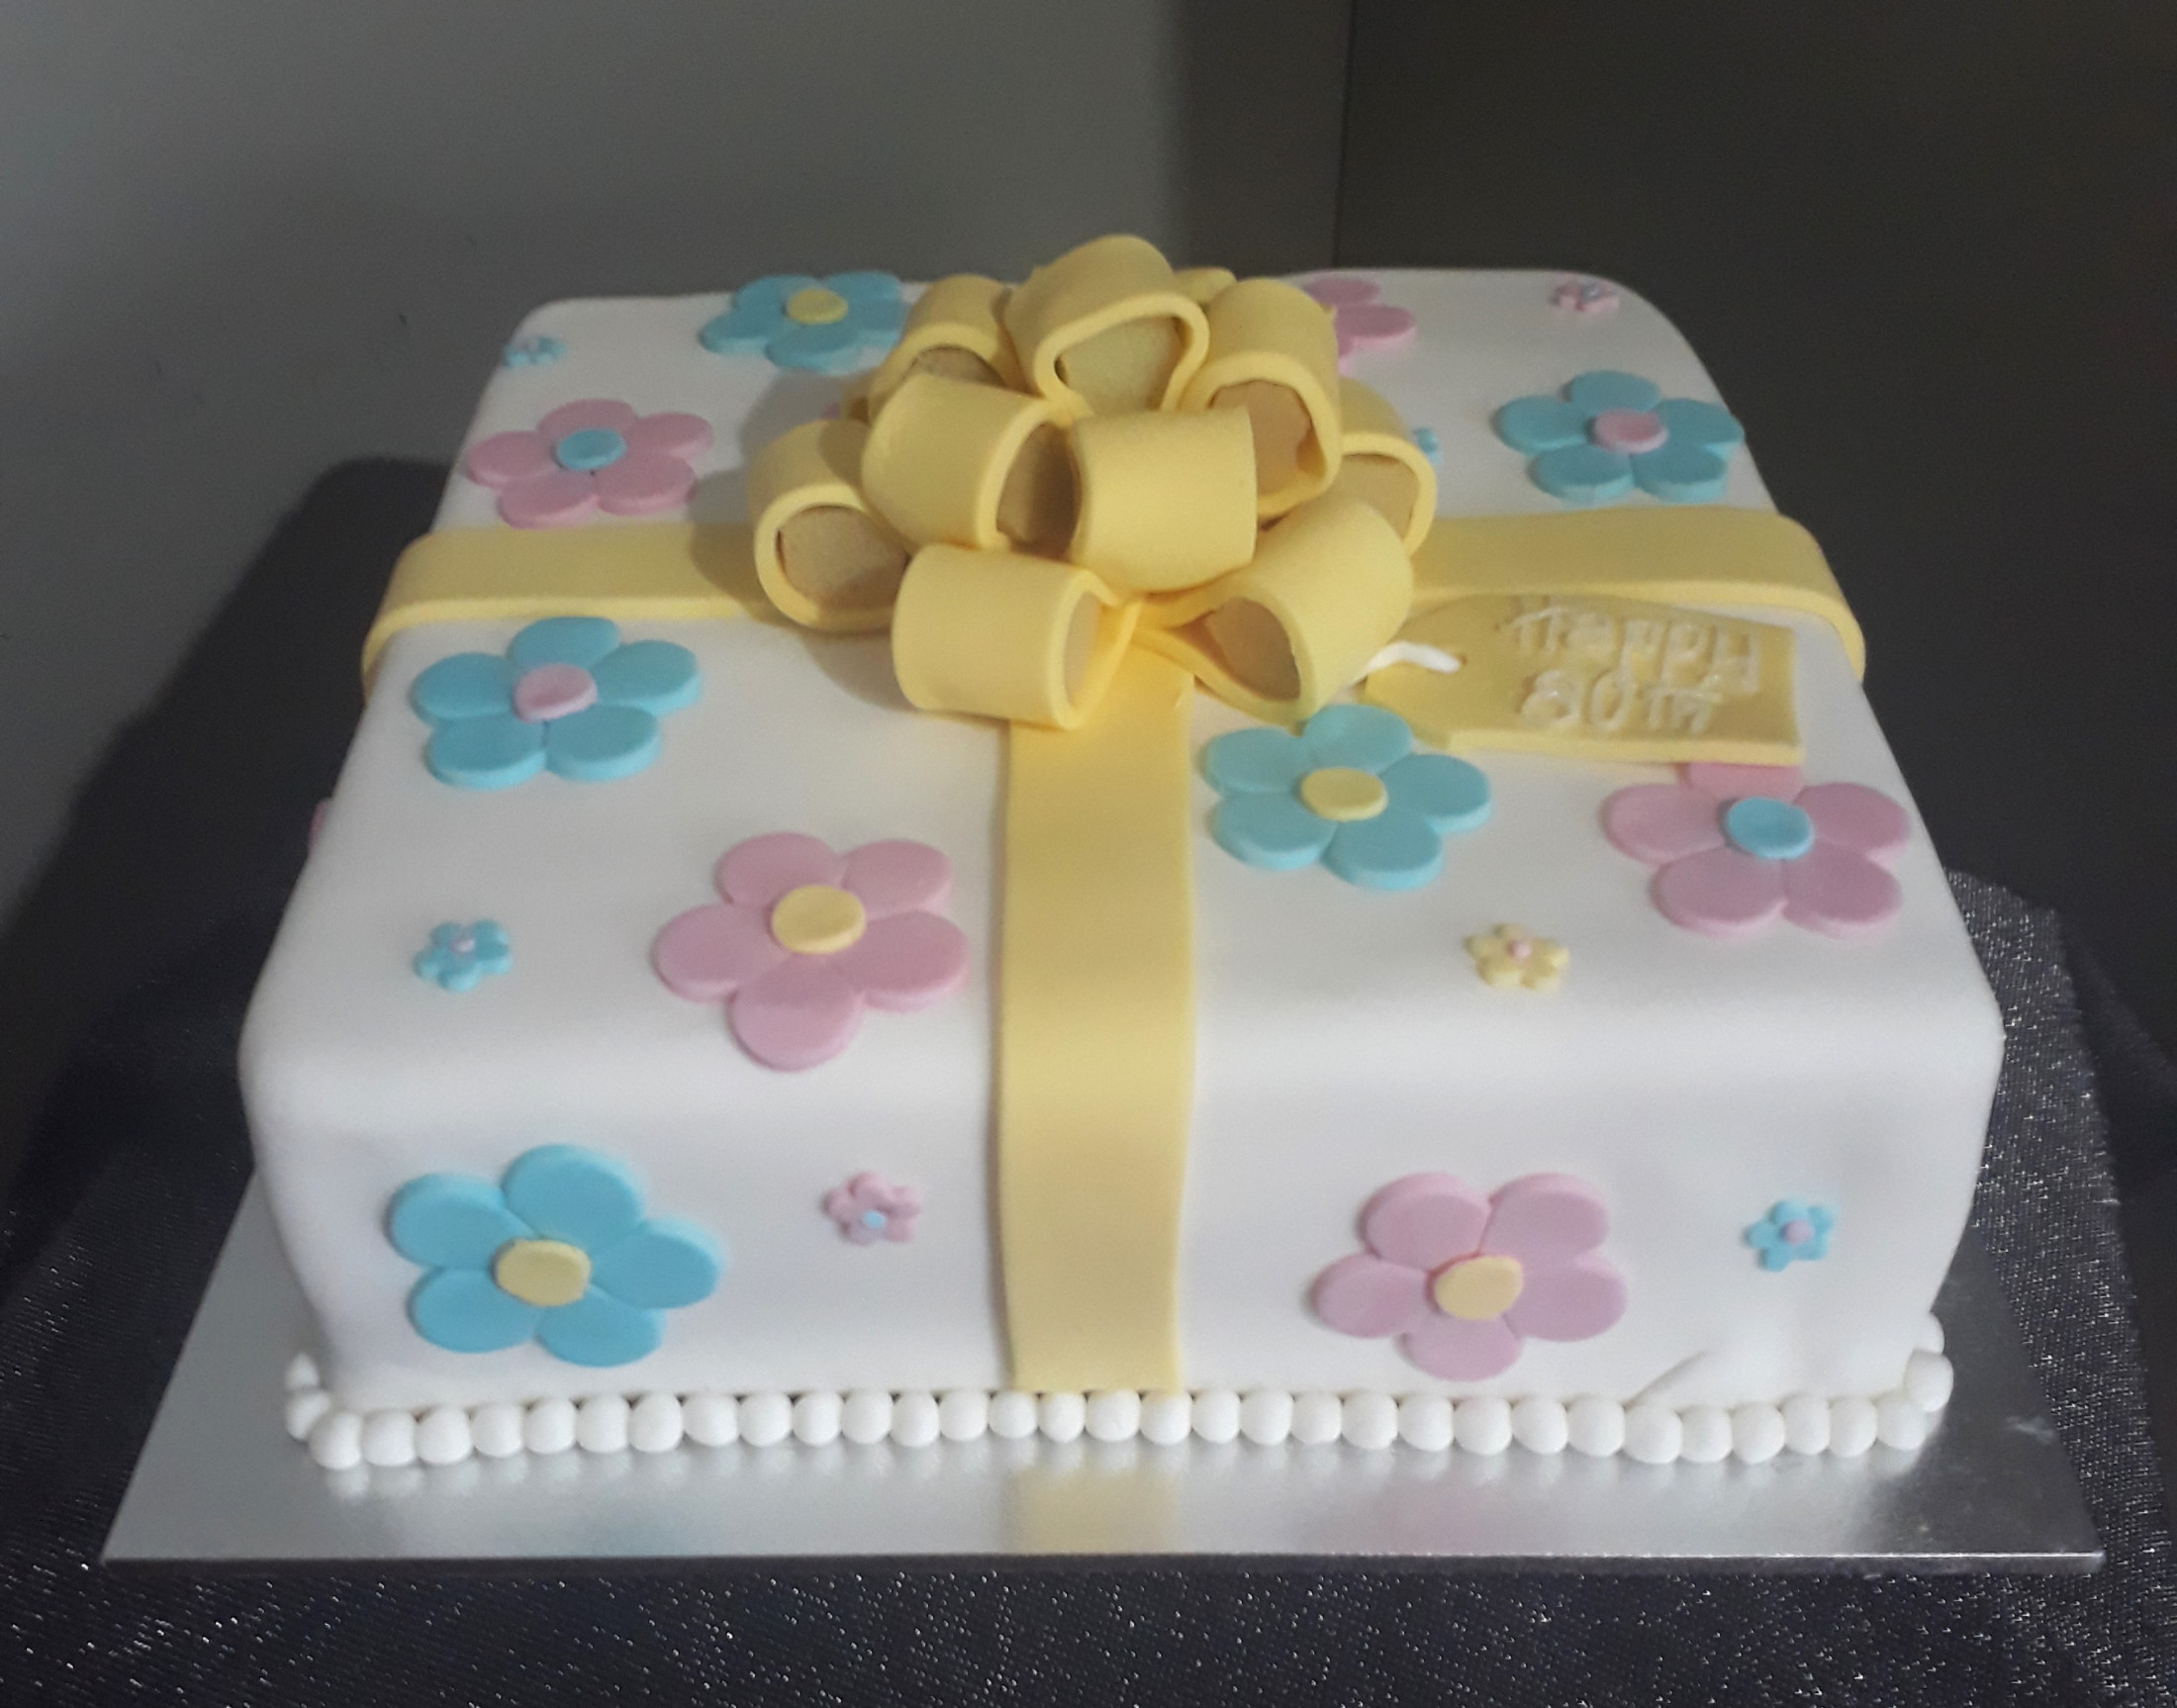 Cake Decorating - Cover a Square Cake including Bow